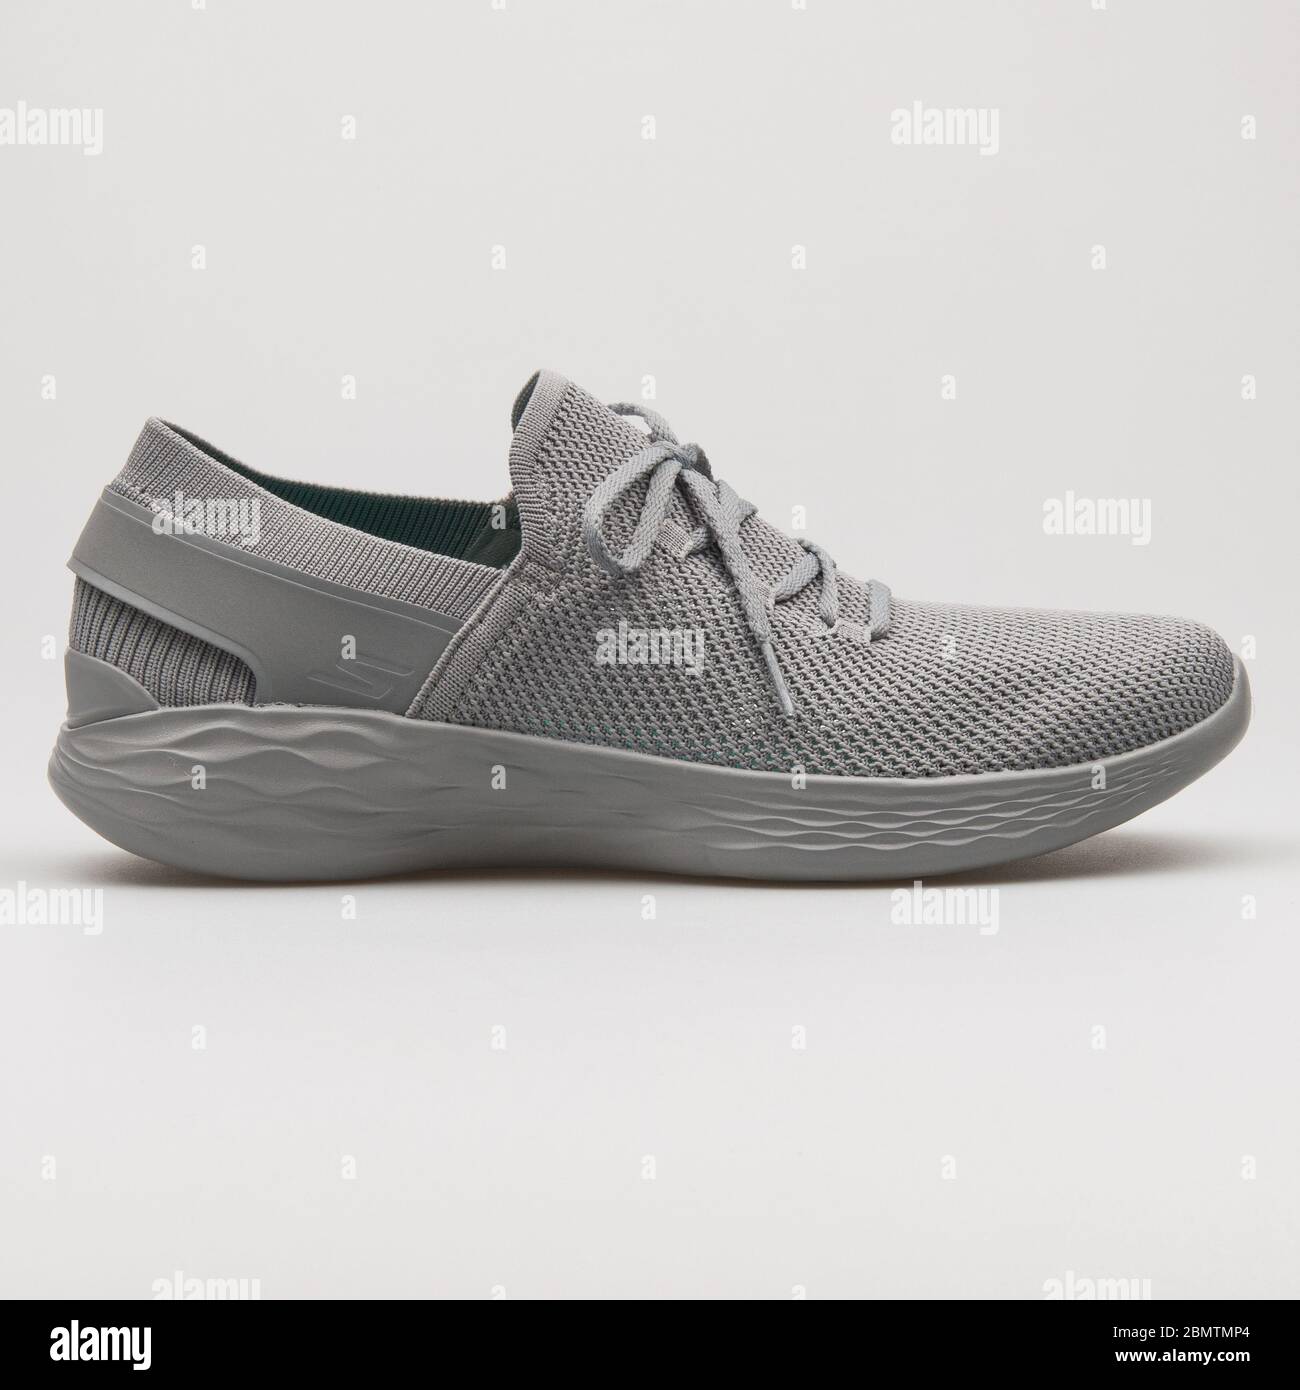 Skechers You Spirit grey sneaker 